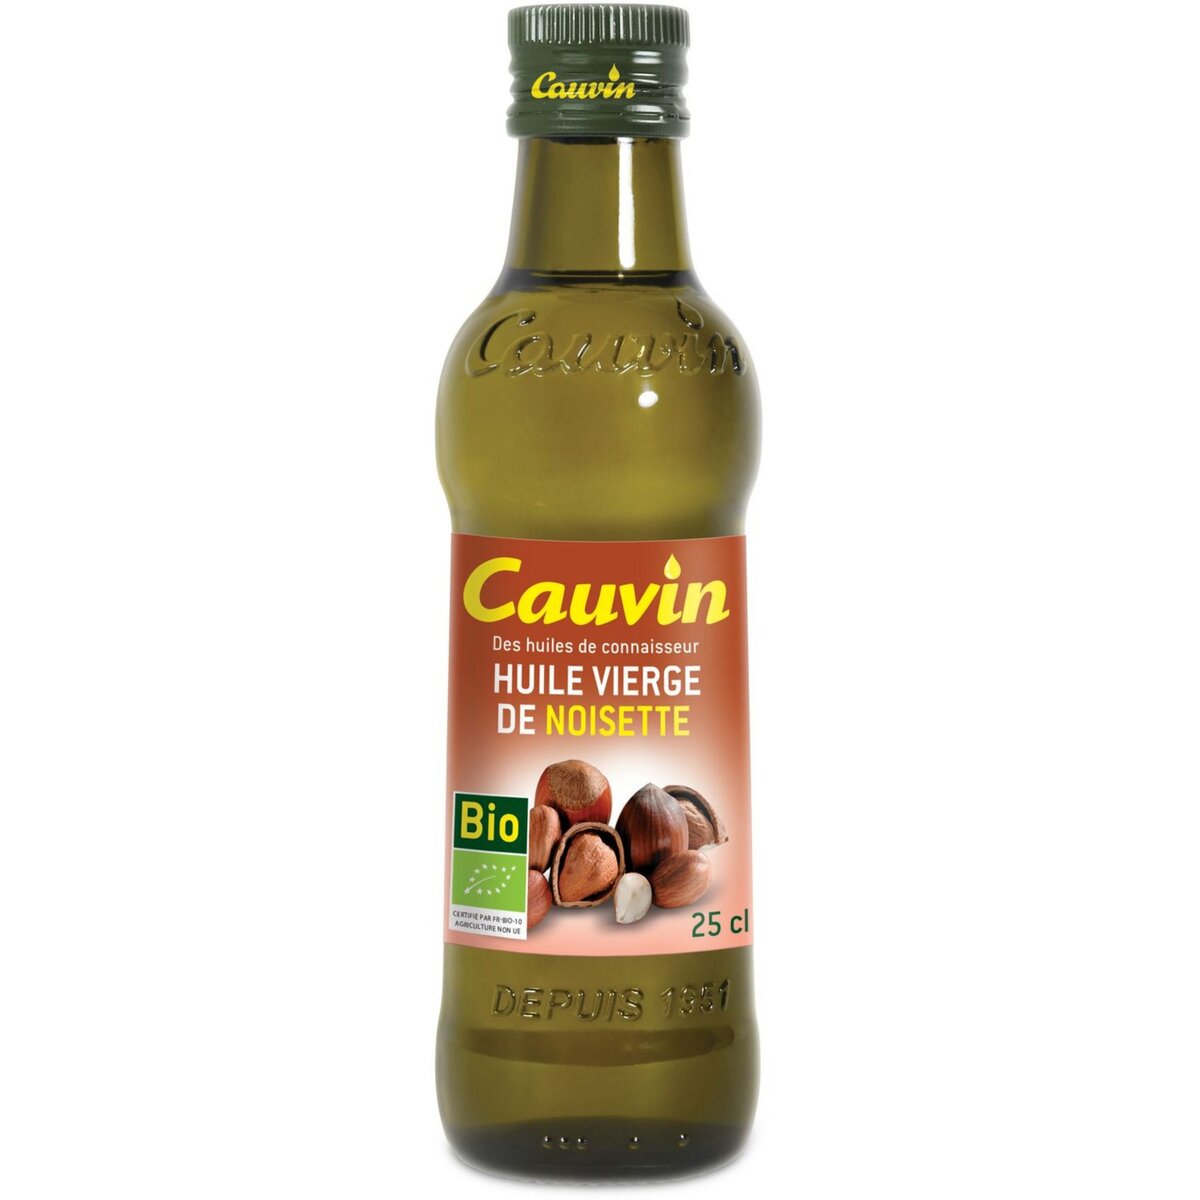 CAUVIN Cauvin huile de noisette bio 25cl